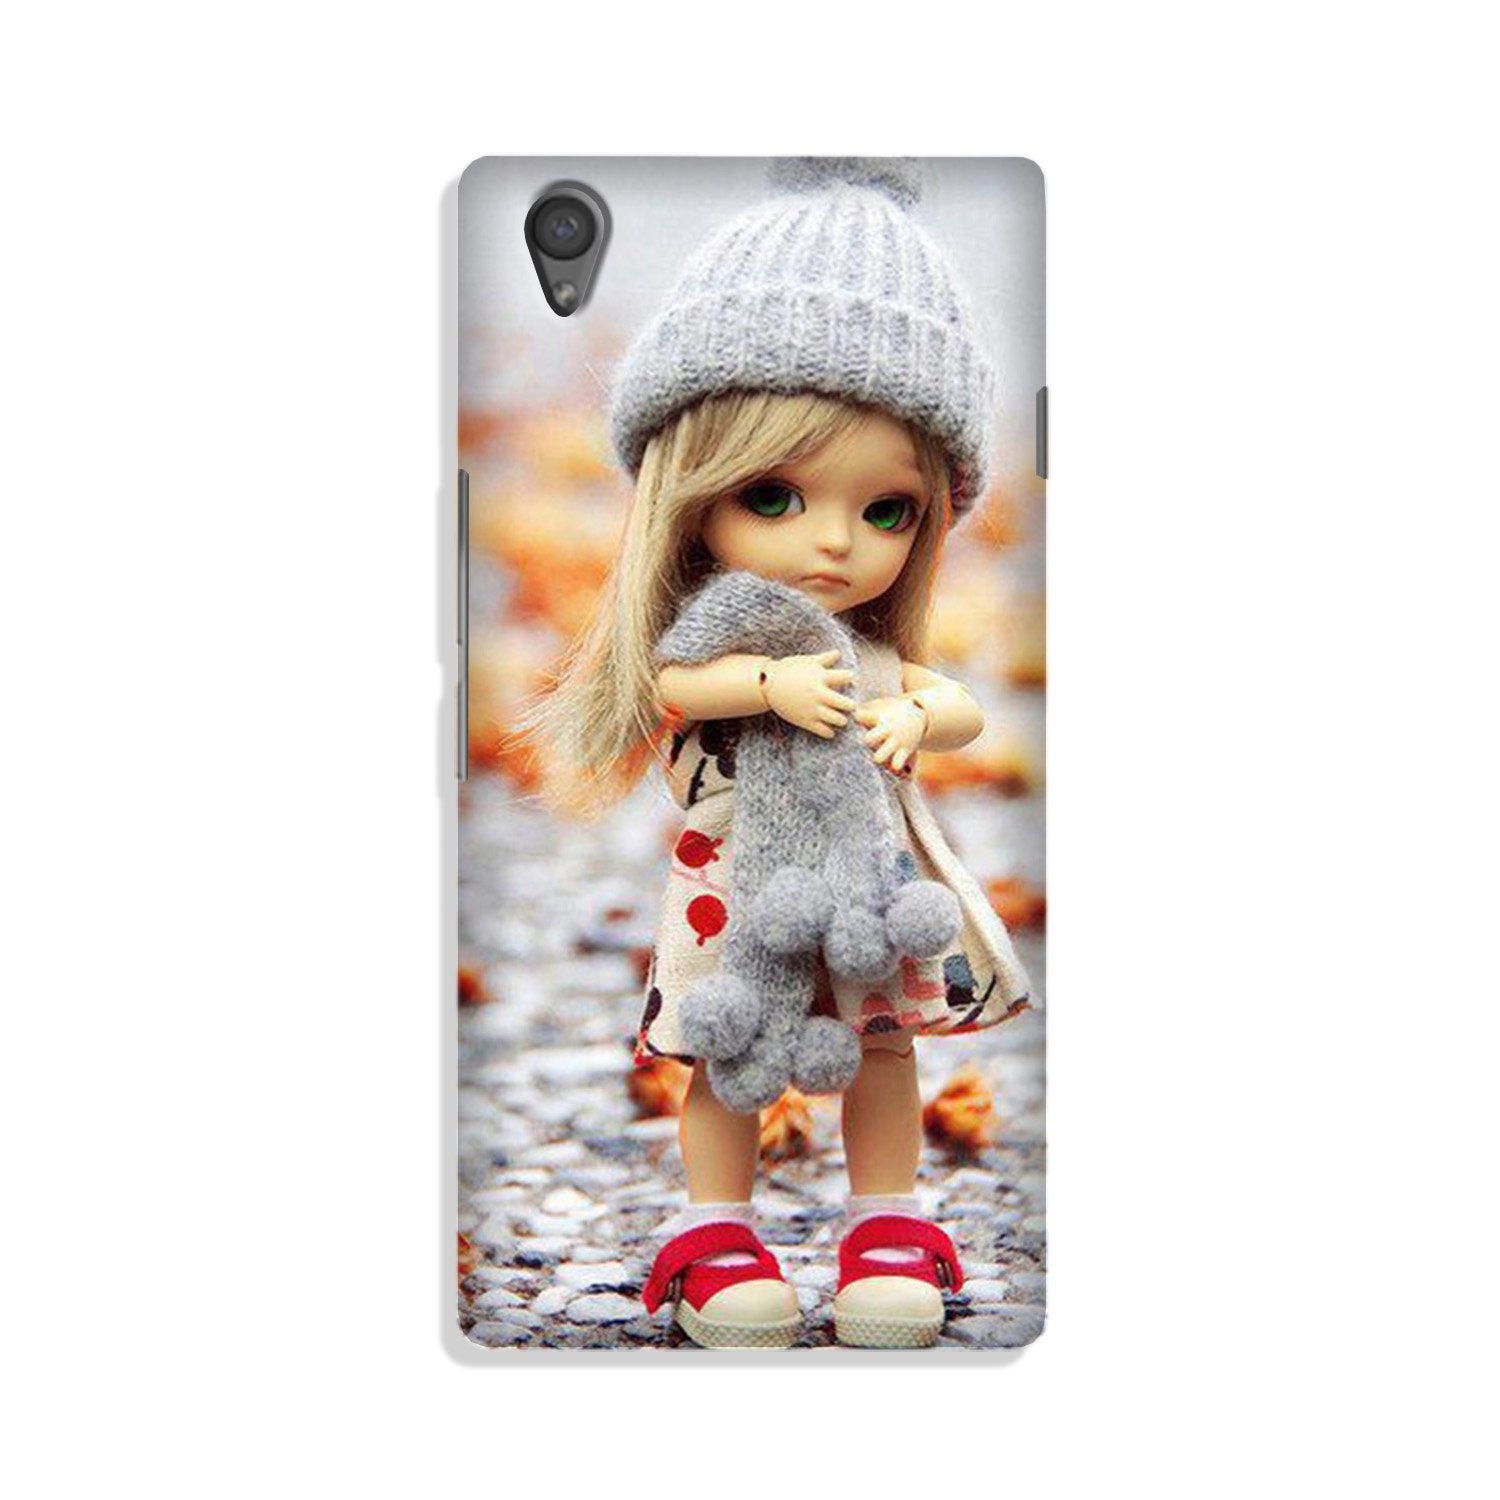 Cute Doll Case for Vivo Y51L